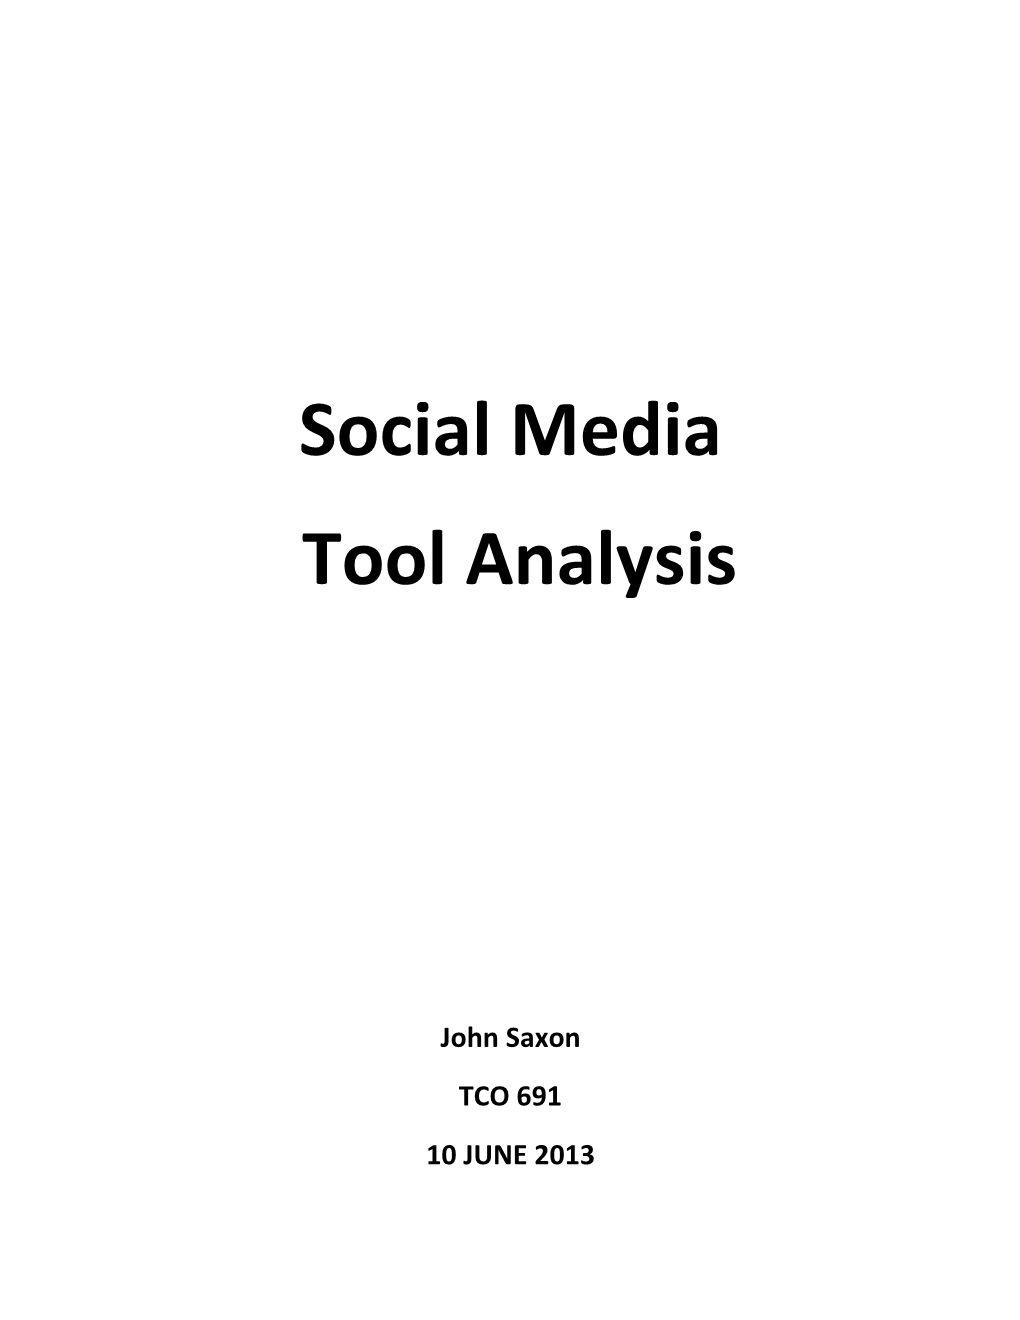 Social Media Tool Analysis